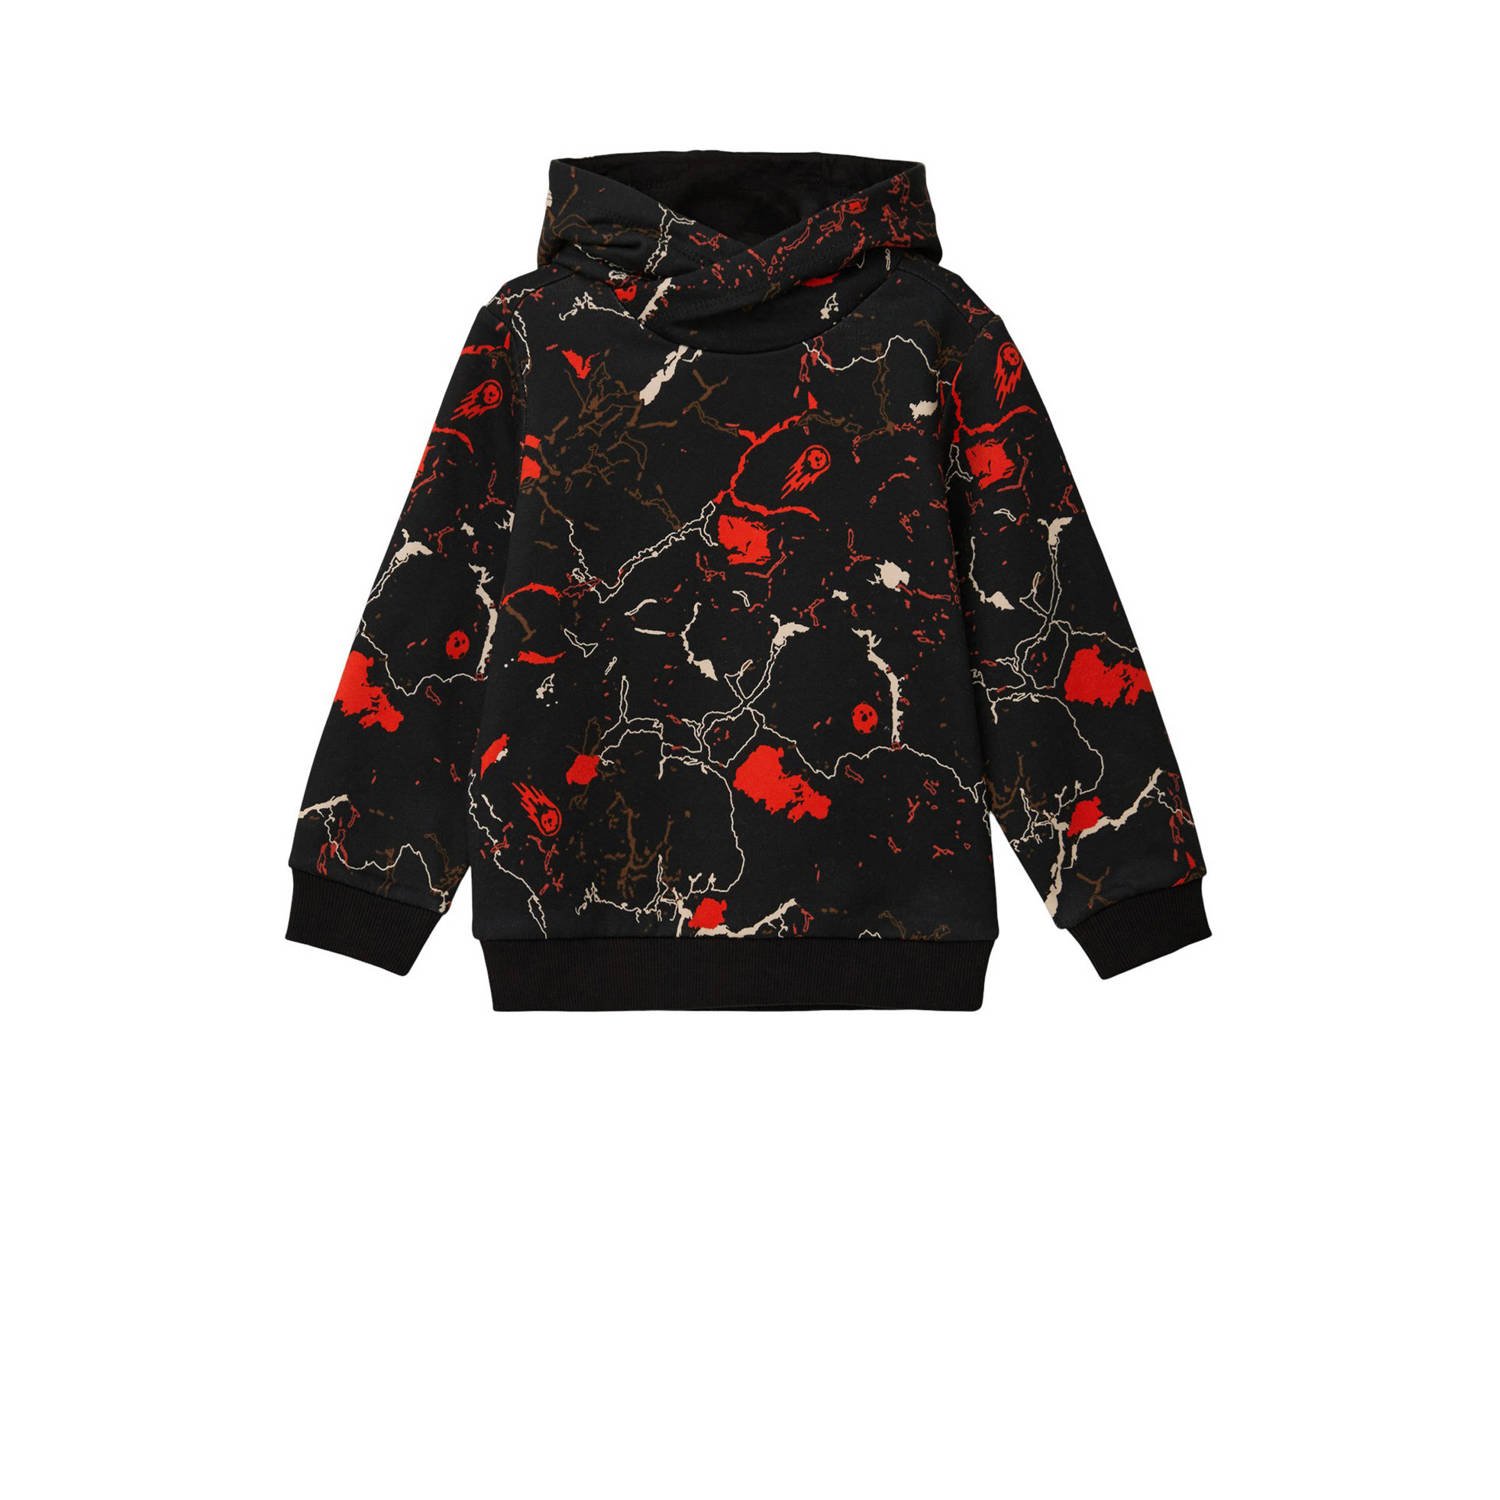 s.Oliver hoodie met all over print zwart rood